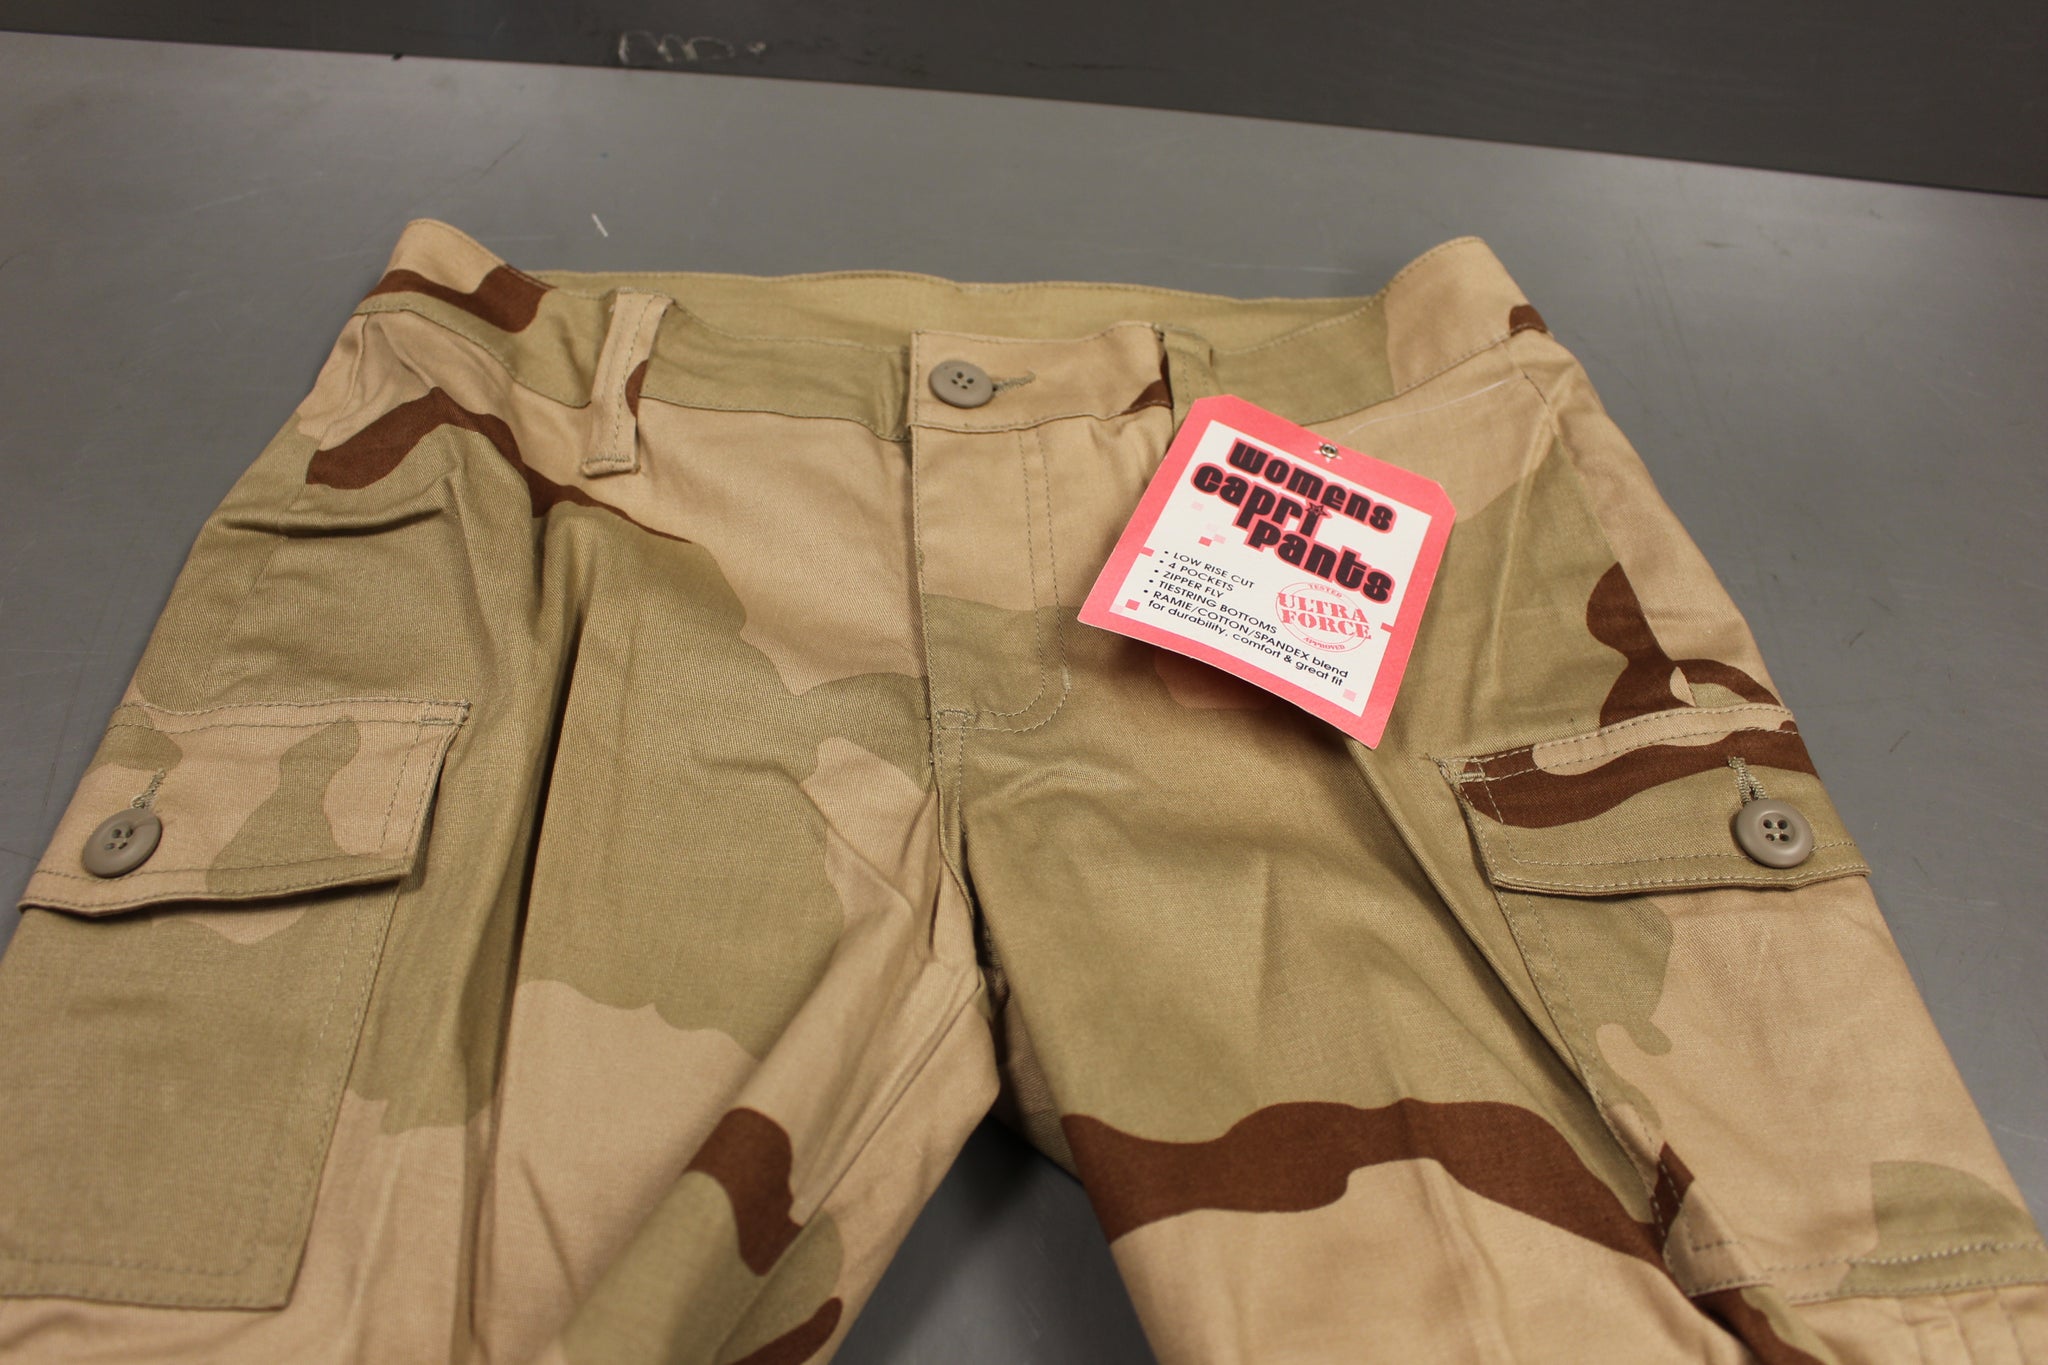 Rothco Military Style Desert Tan Women's Capri Pants, Size: 13/14